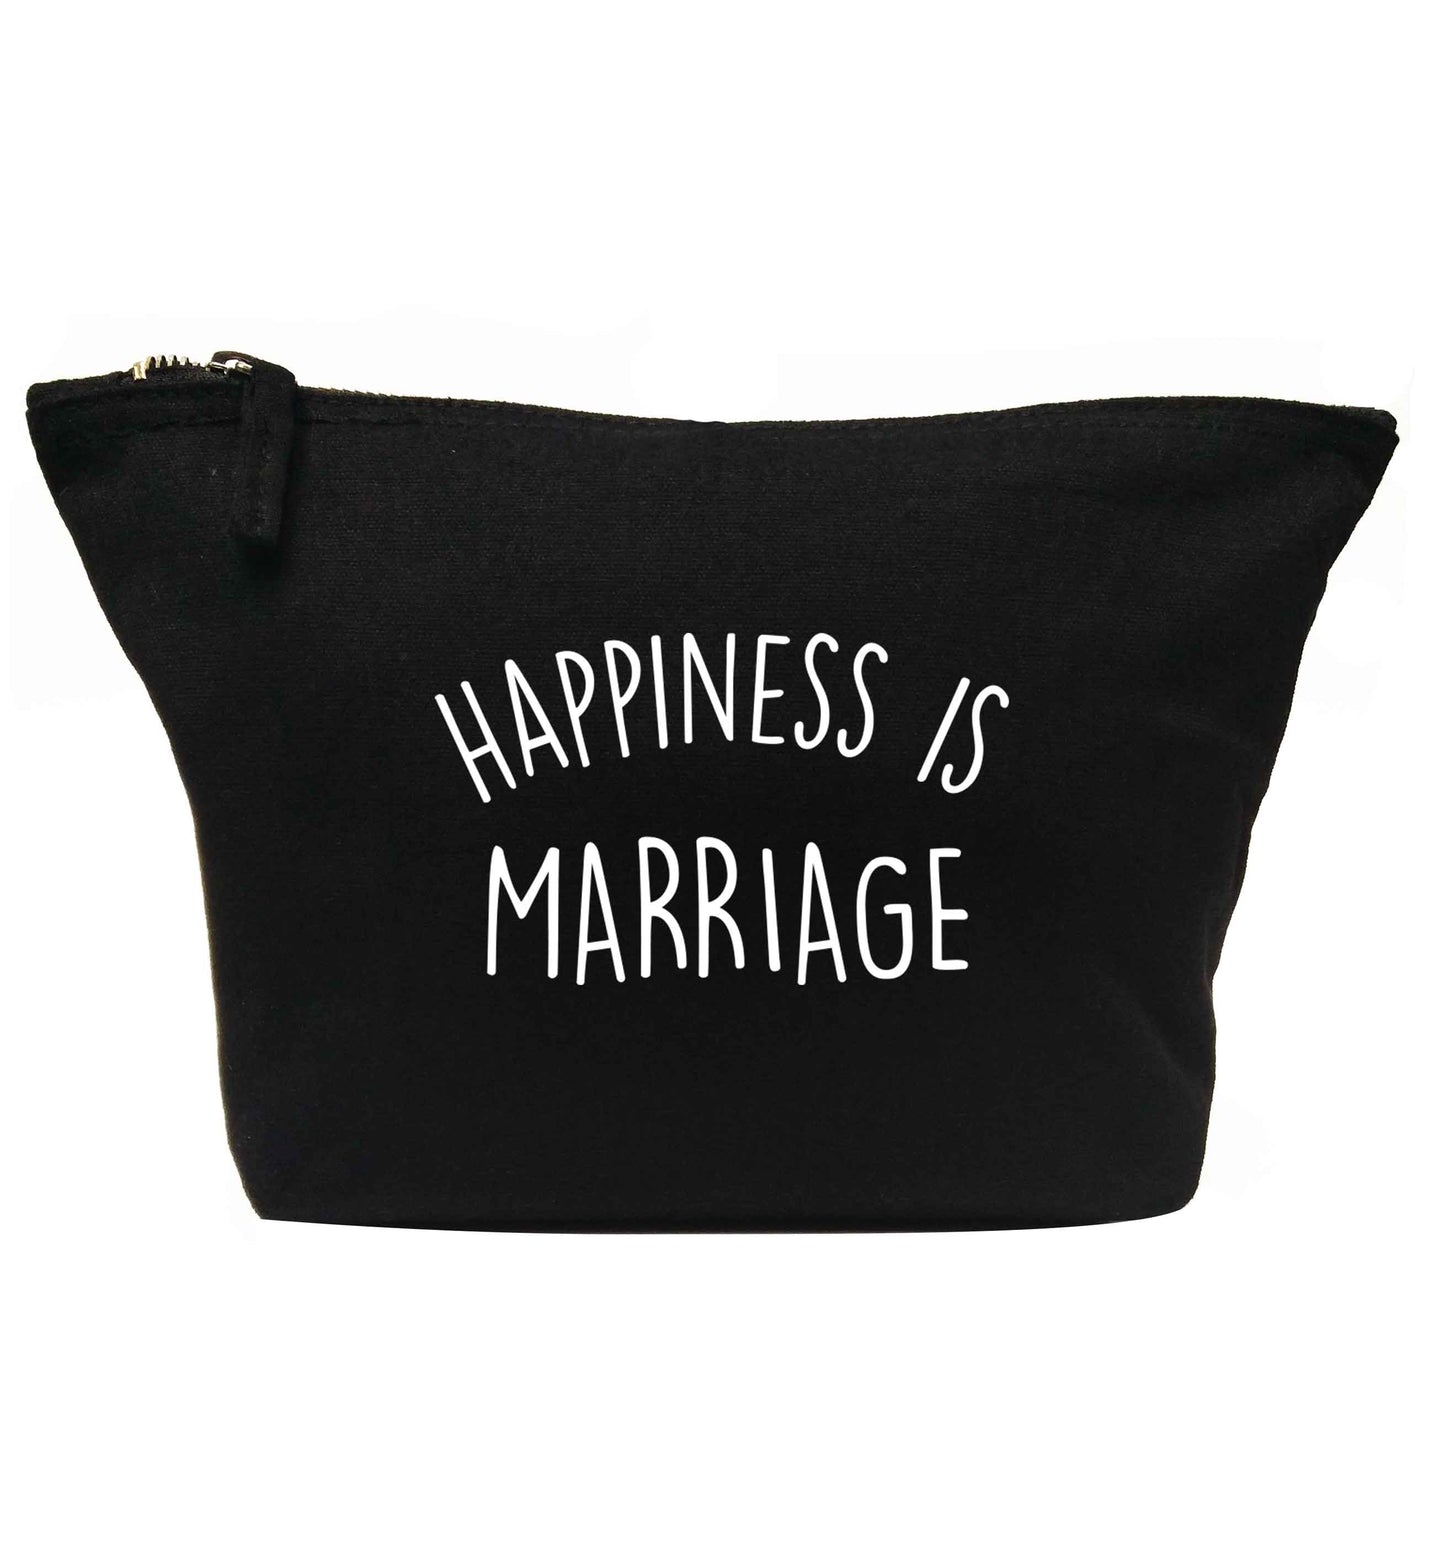 Happiness is wedding planning | Makeup / wash bag